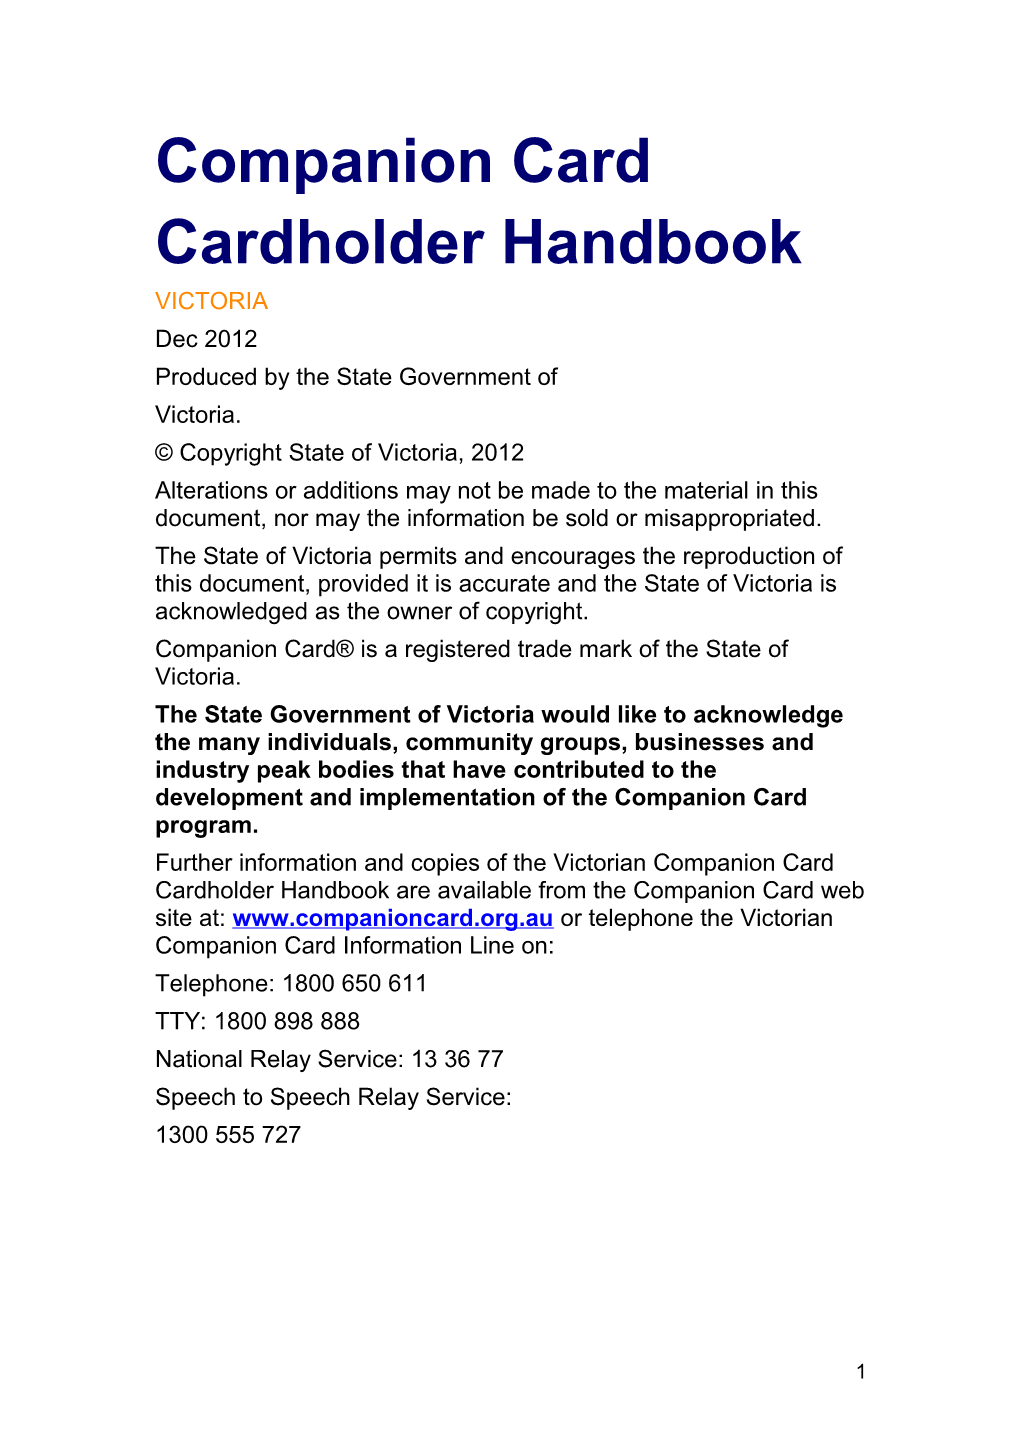 Companion Card Card Holder Handbook - Word - December 2012